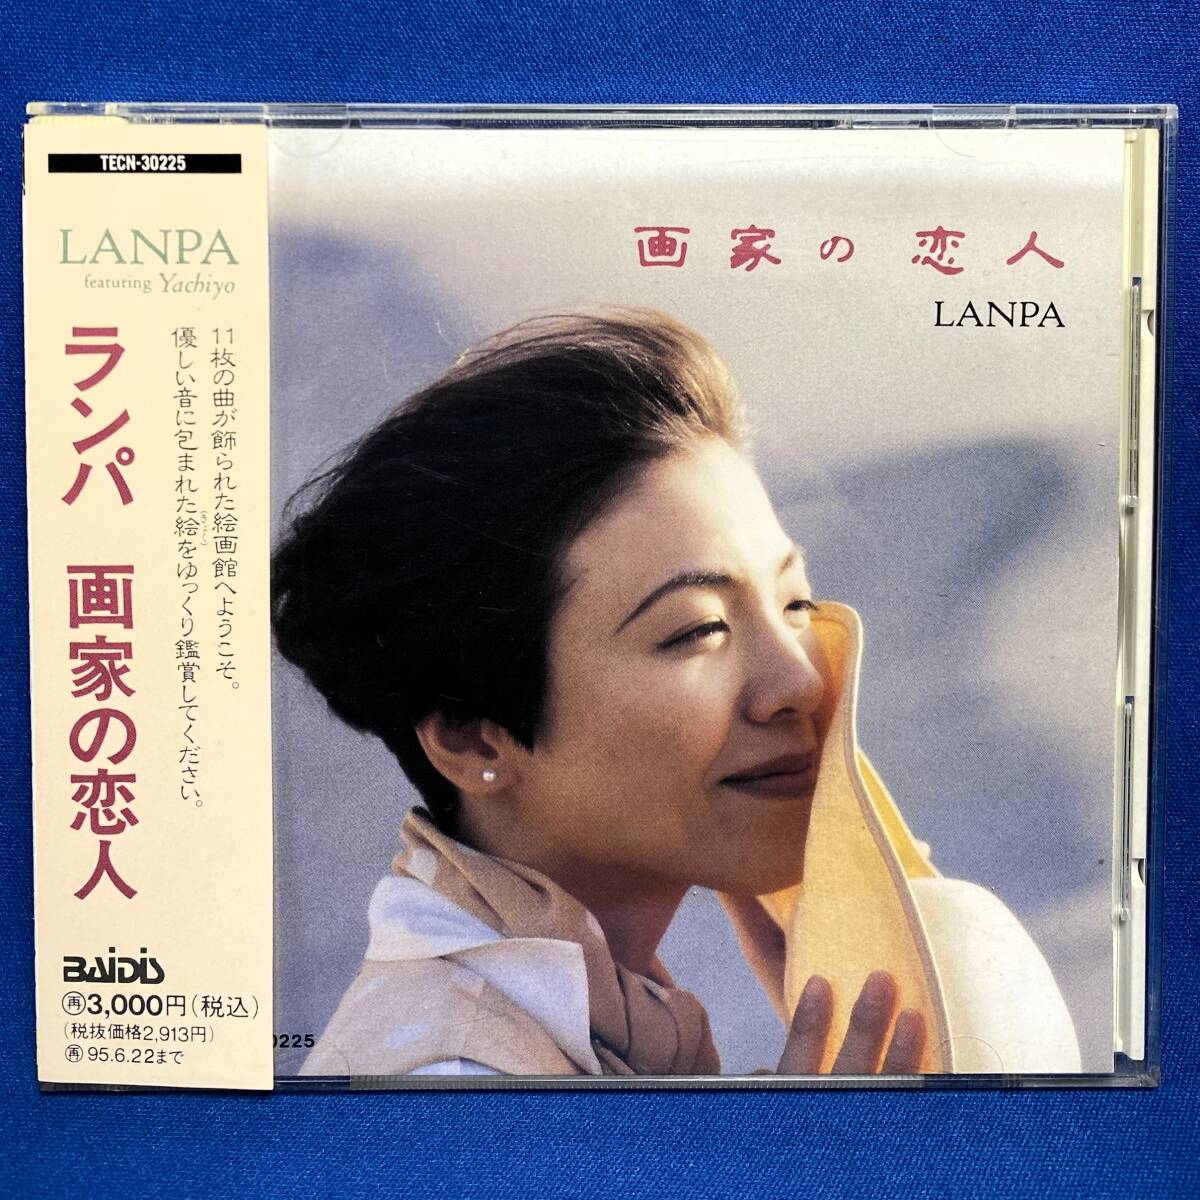 LANPA featuring Yachiyo / 画家の恋人 / 見本品 sample プロモ CD / TECN-30225_画像1